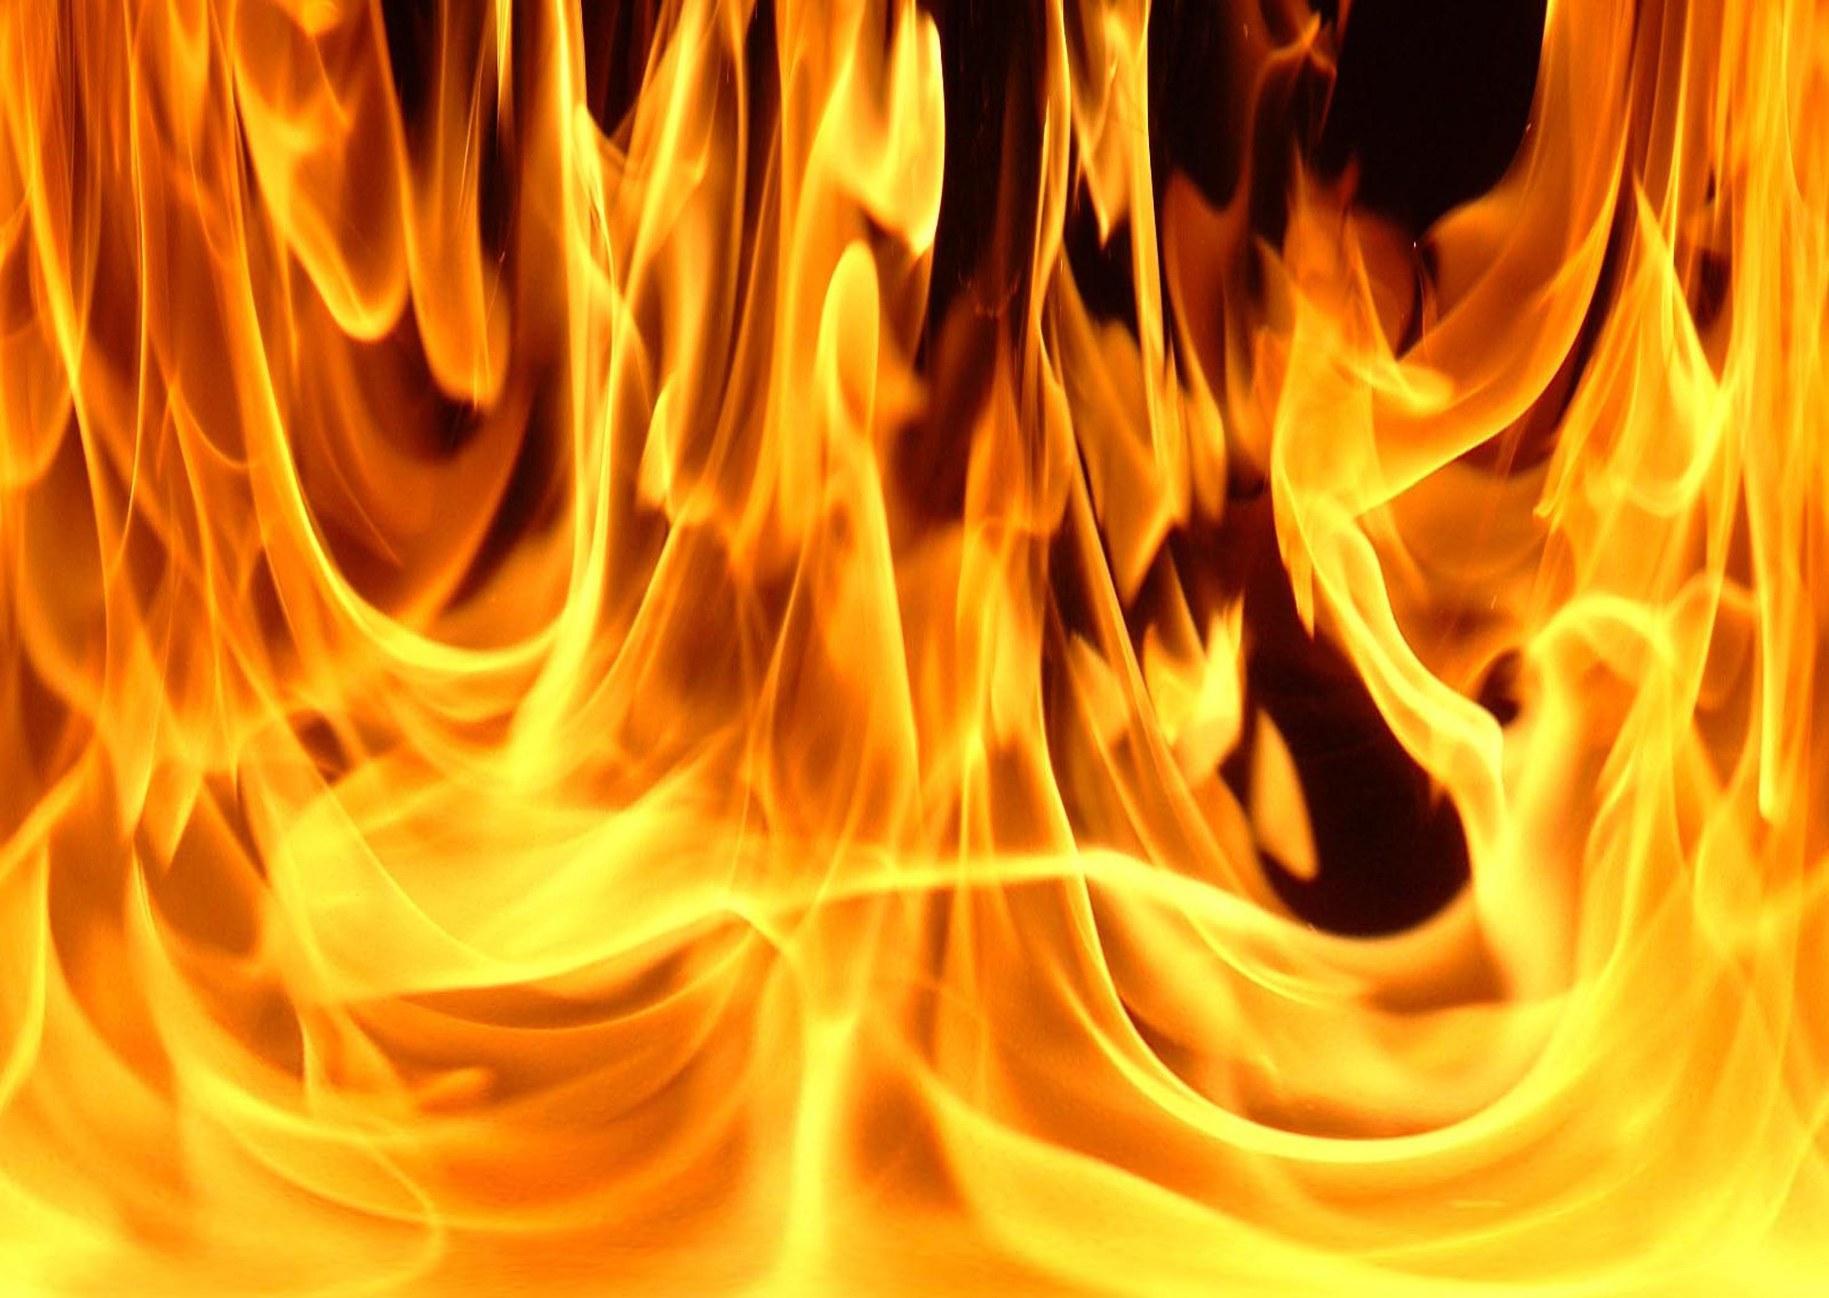 Flames of fire free desktop background wallpaper image